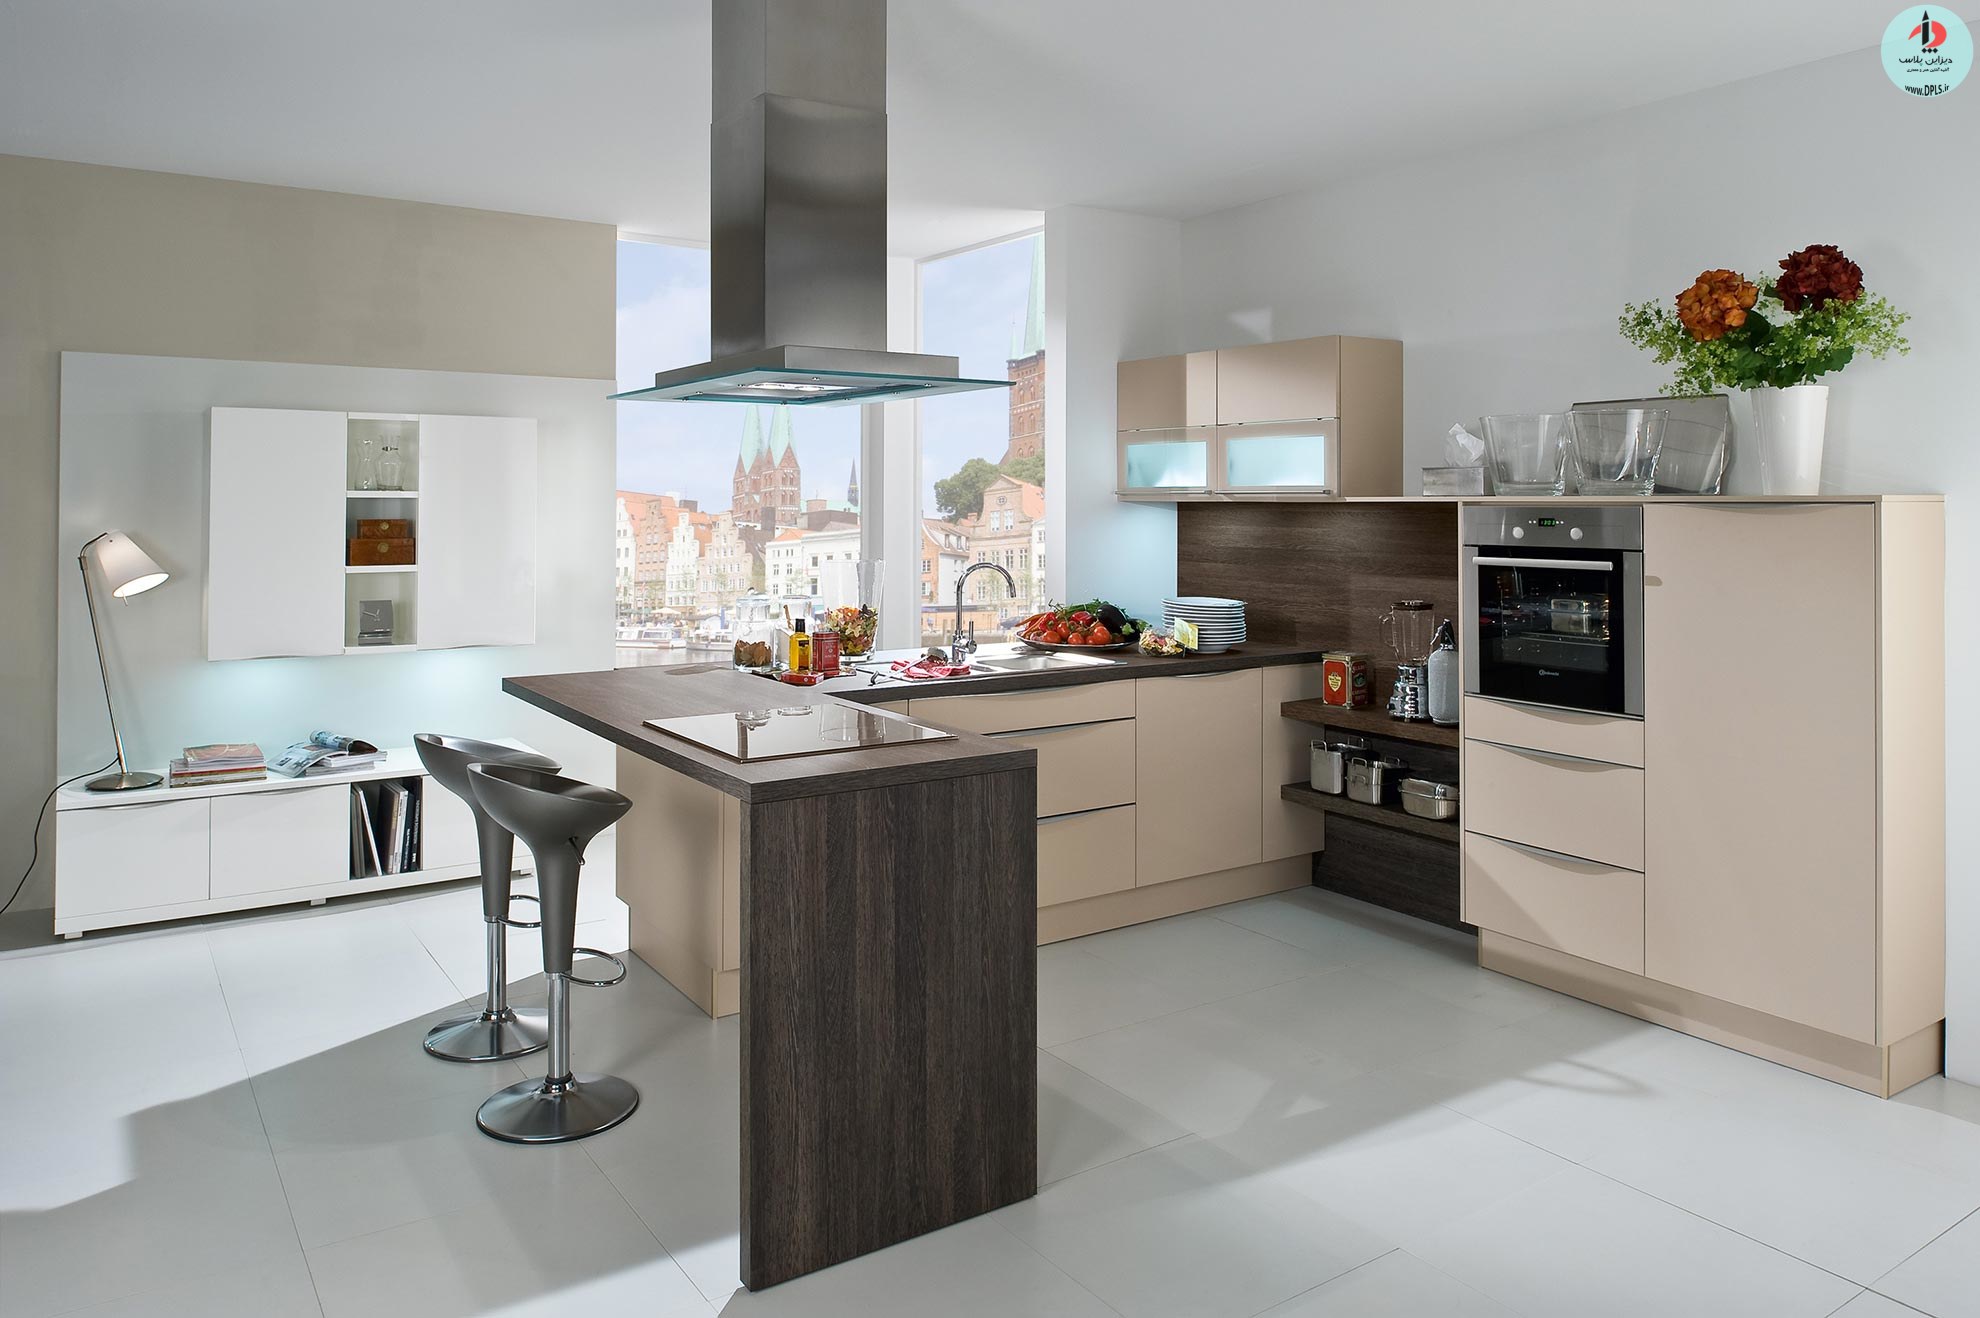 kitchen04 - اصول طراحی فضای آشپزخانه